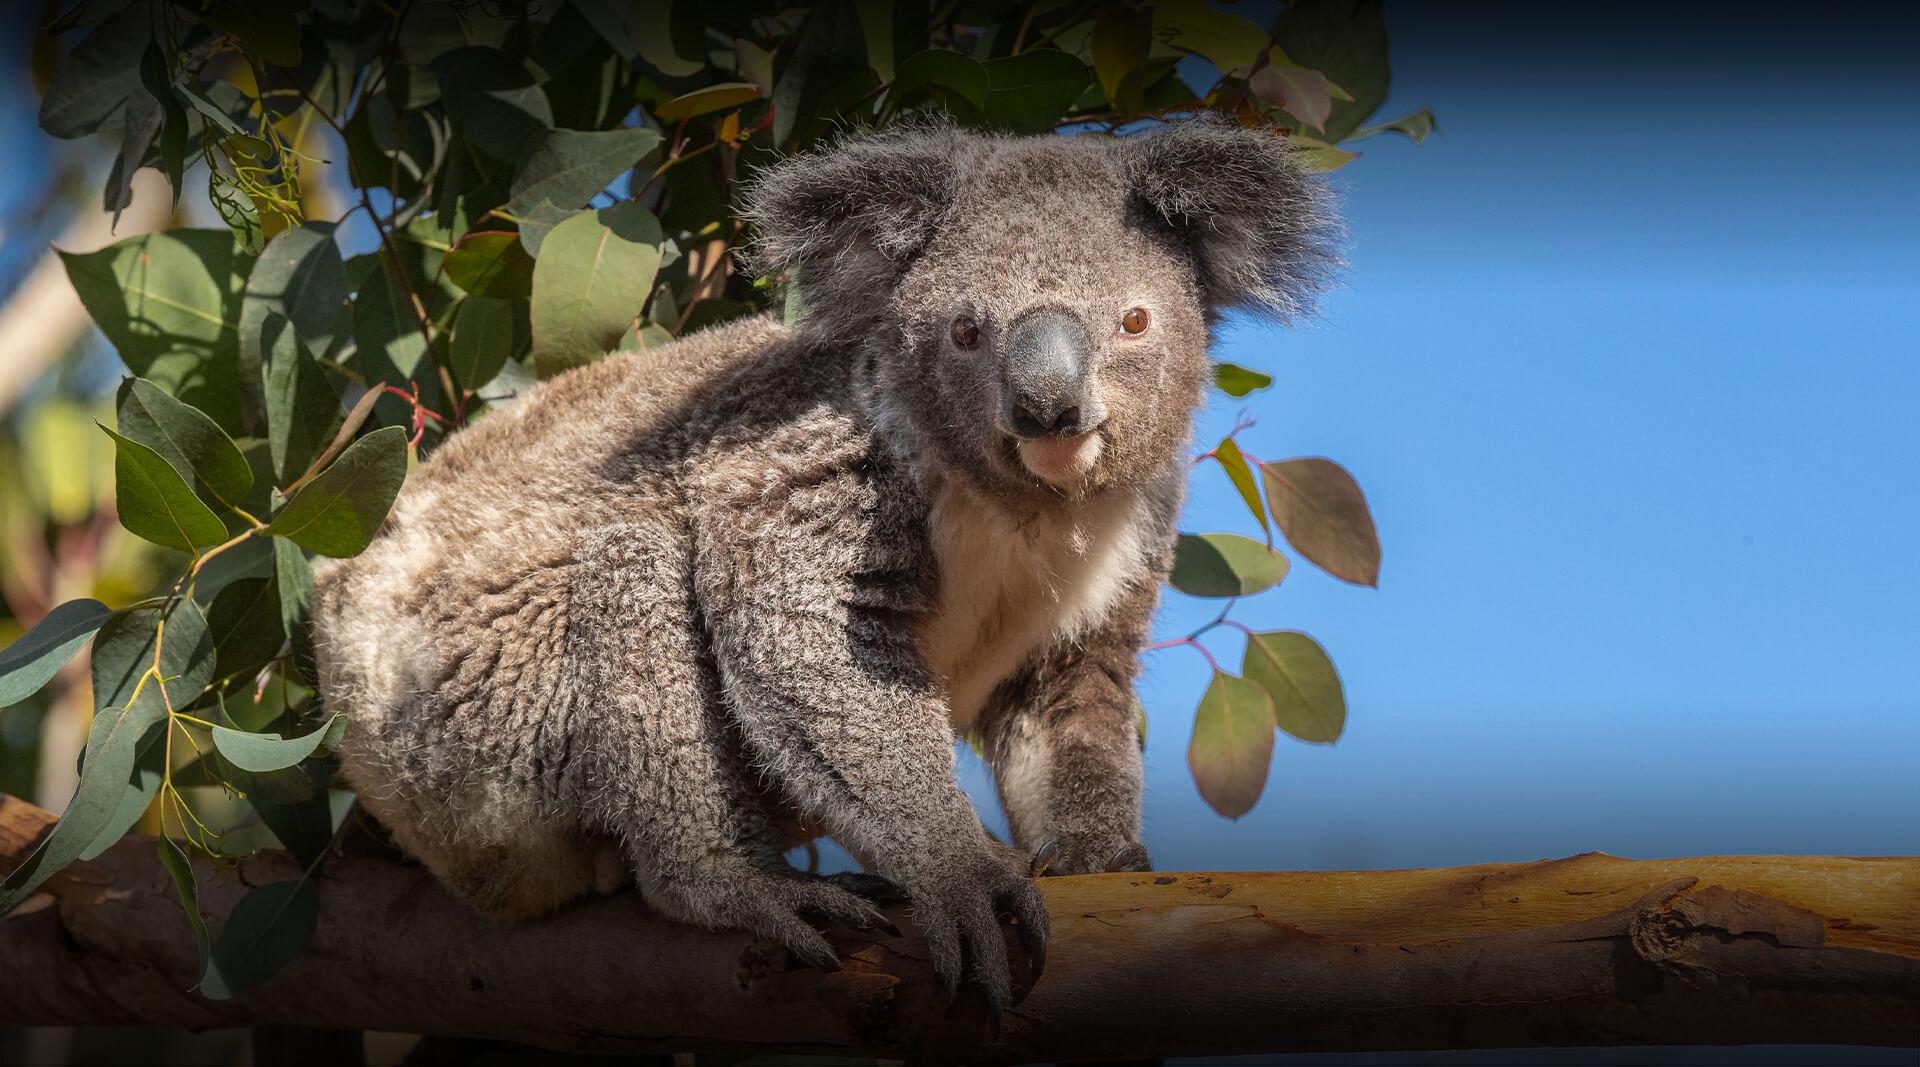 Koala sits on a branch looking at camera.